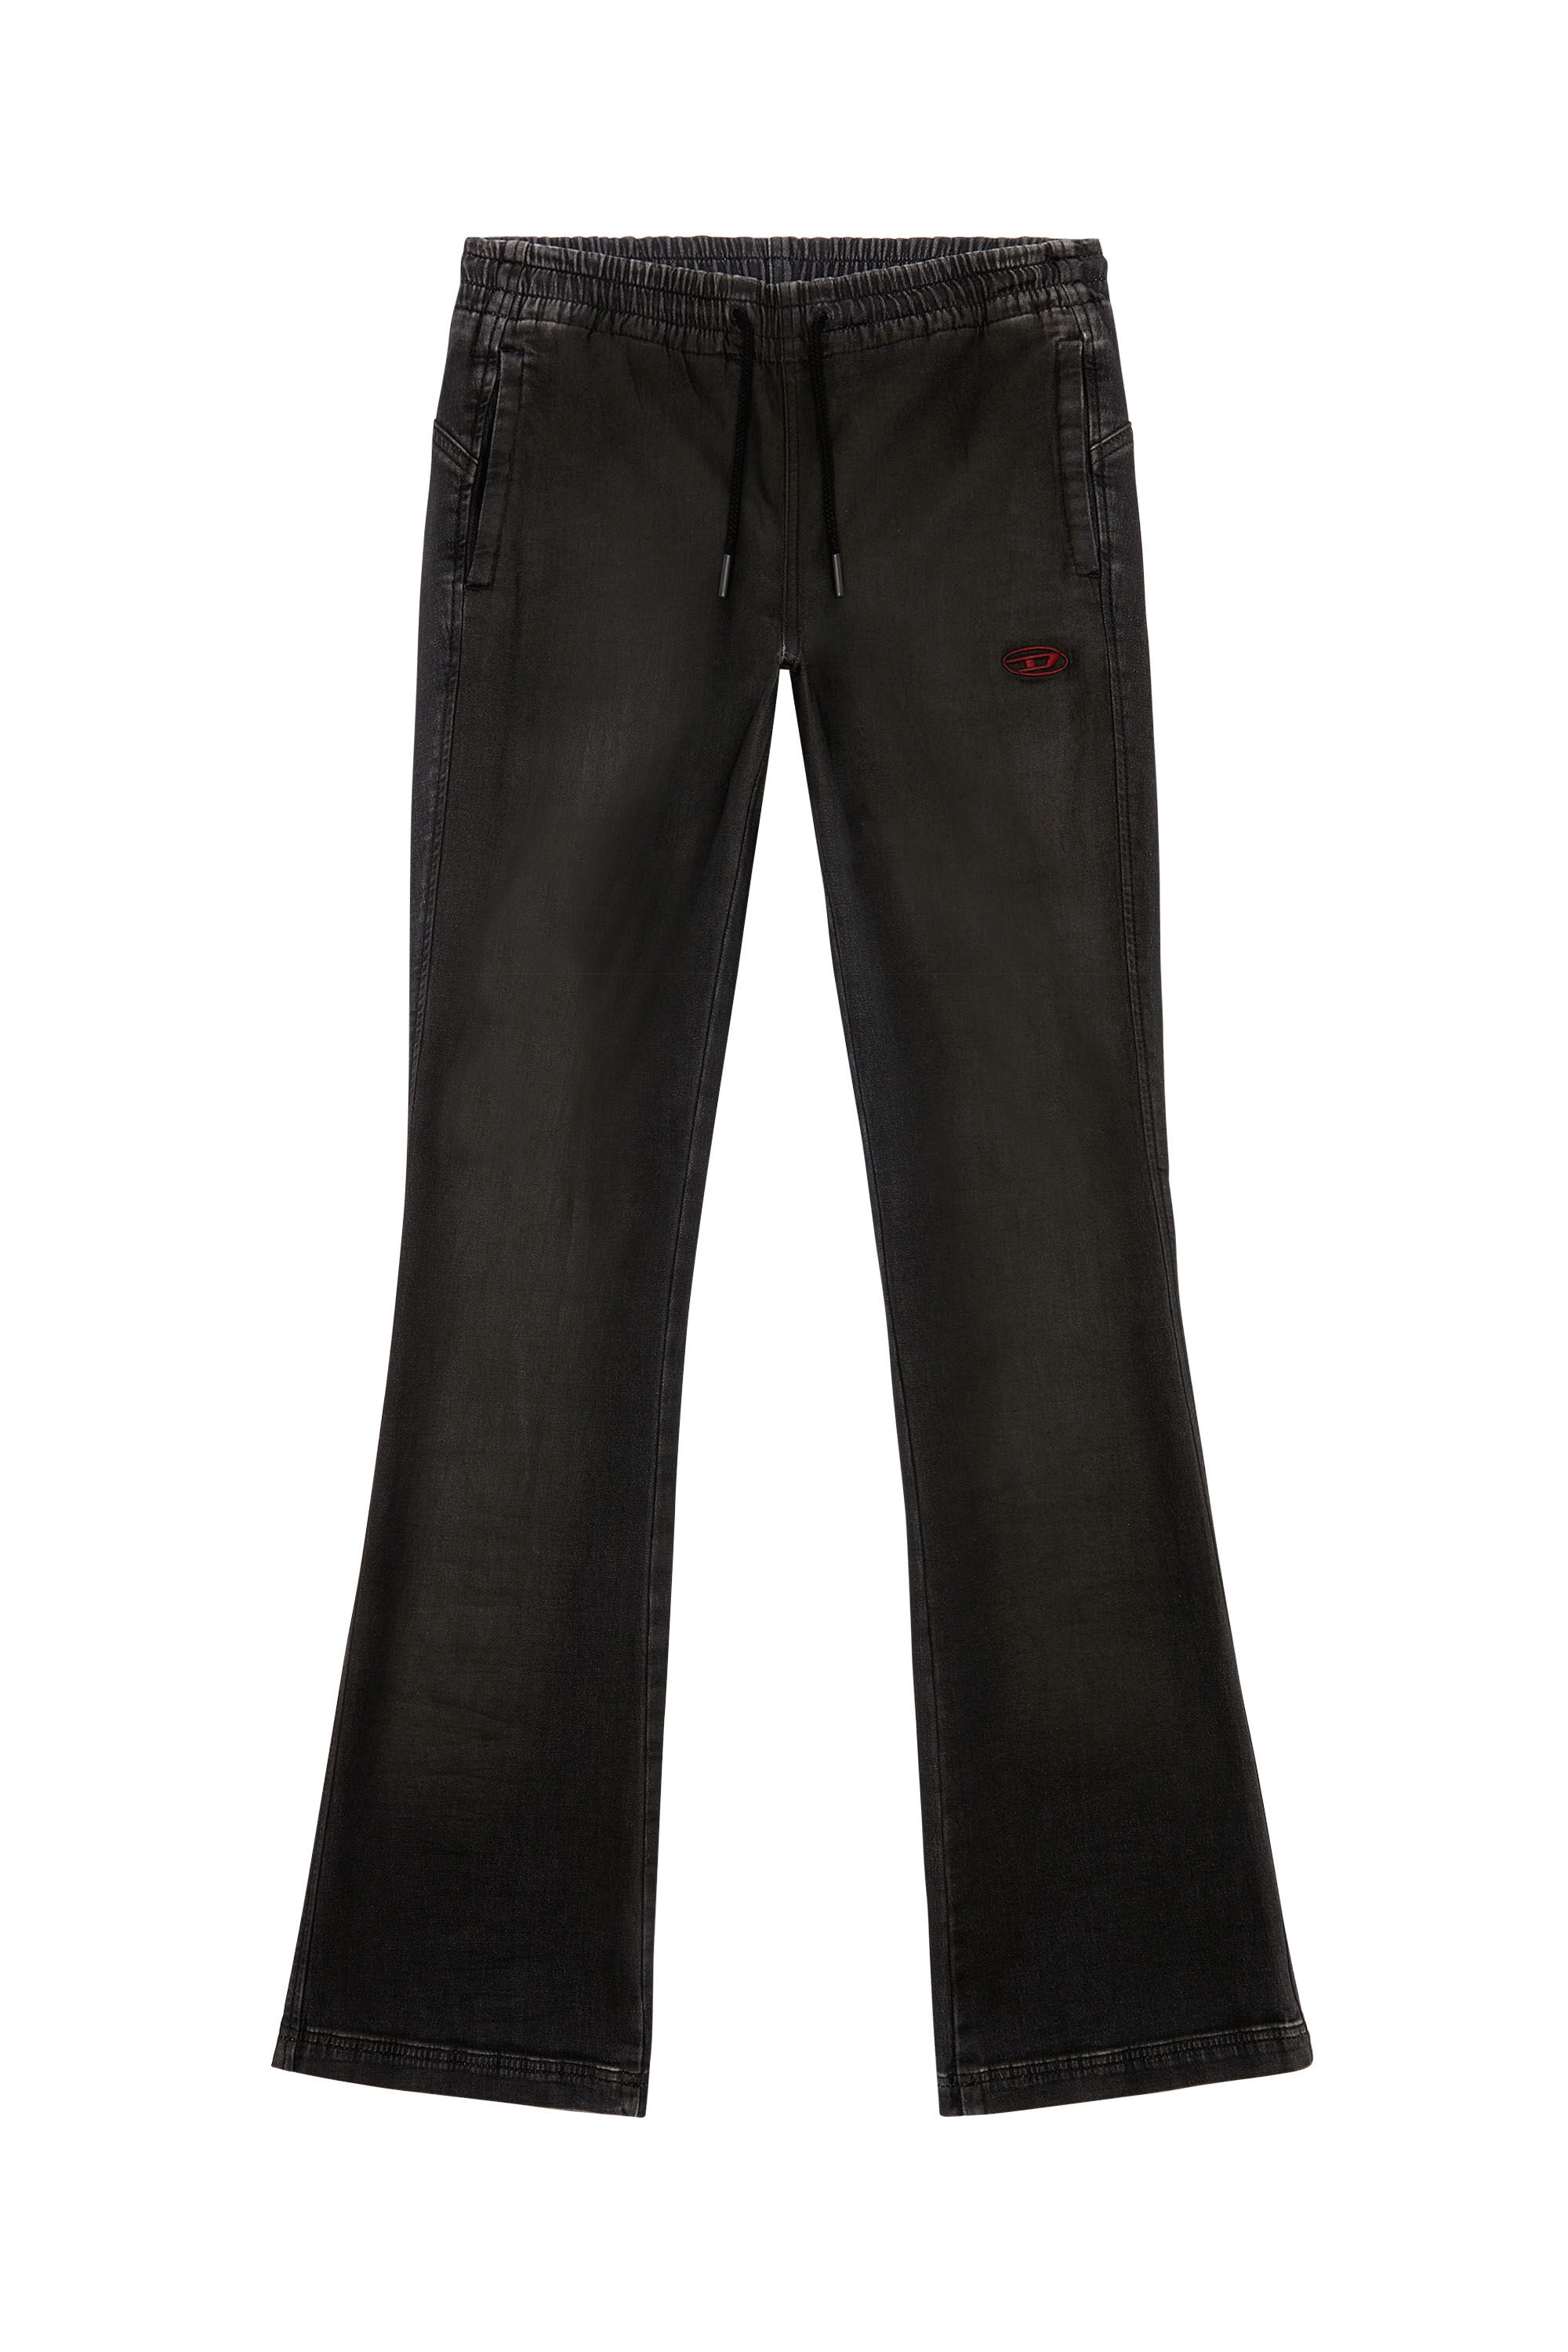 Women's Bootcut and Flare Jeans | Black/Dark grey | Diesel 2069 D-Ebbey ...